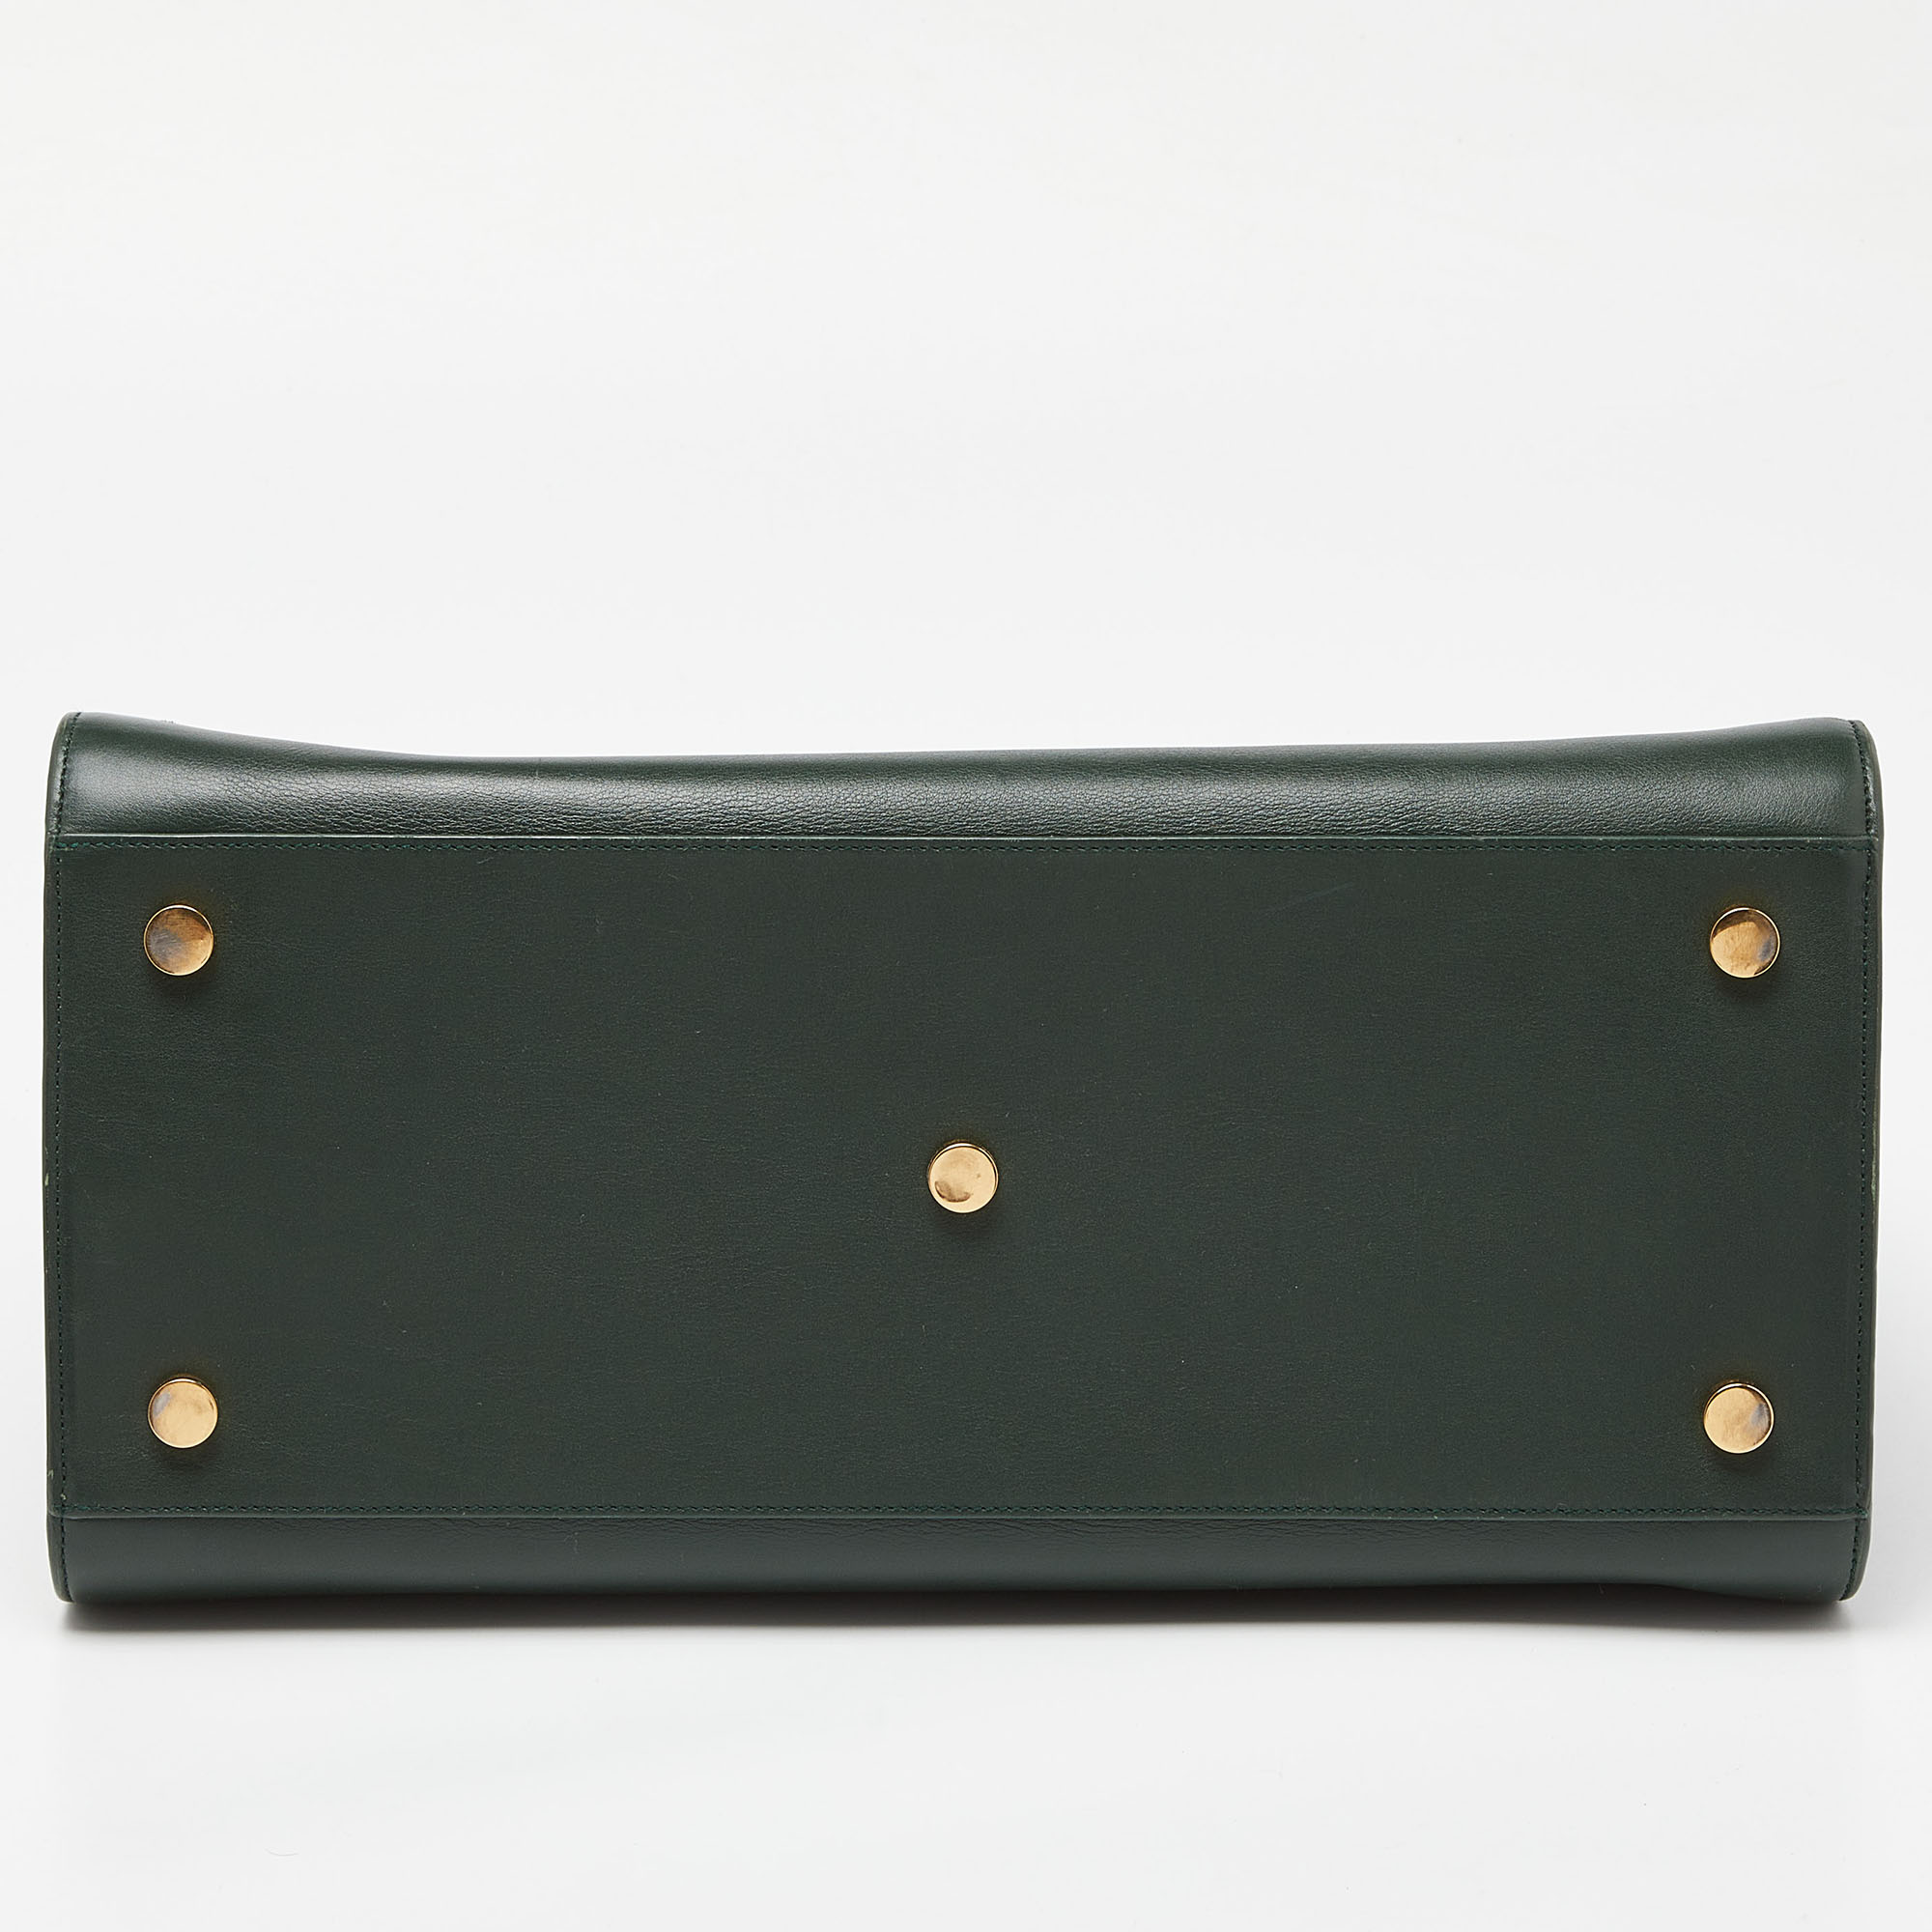 Saint Laurent Green Leather Medium Classic Sac De Jour Tote